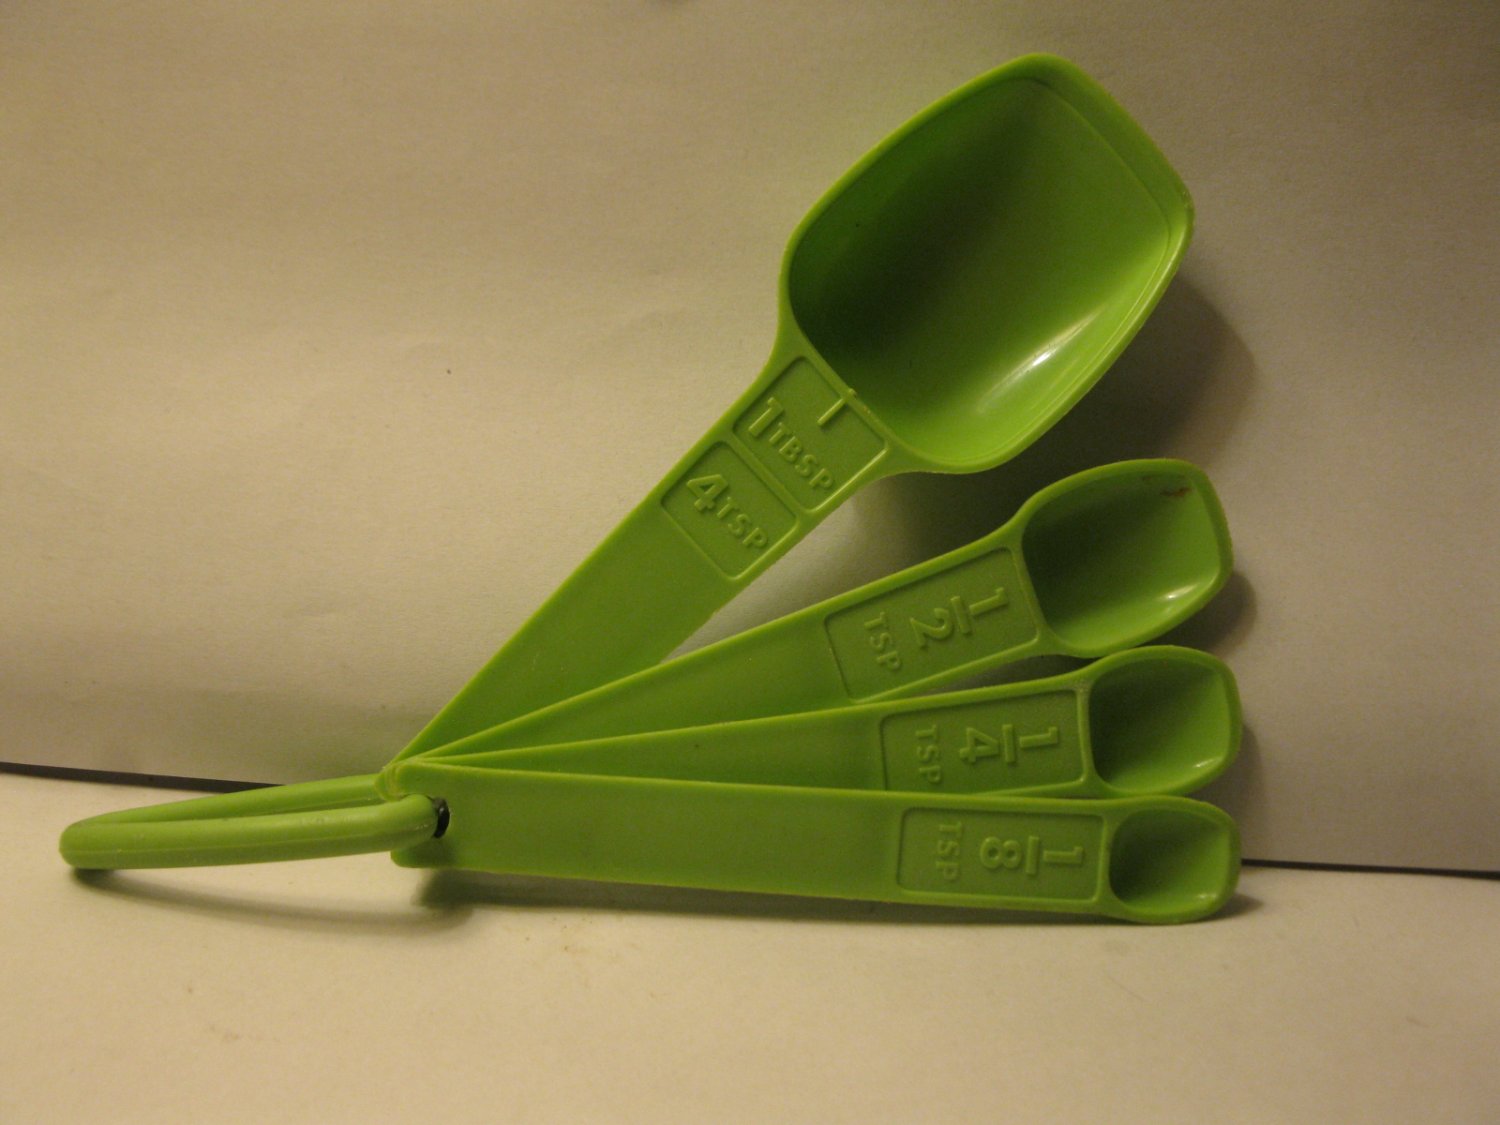 vintage Tupperware Lime Green Measuring Spoons set of 4